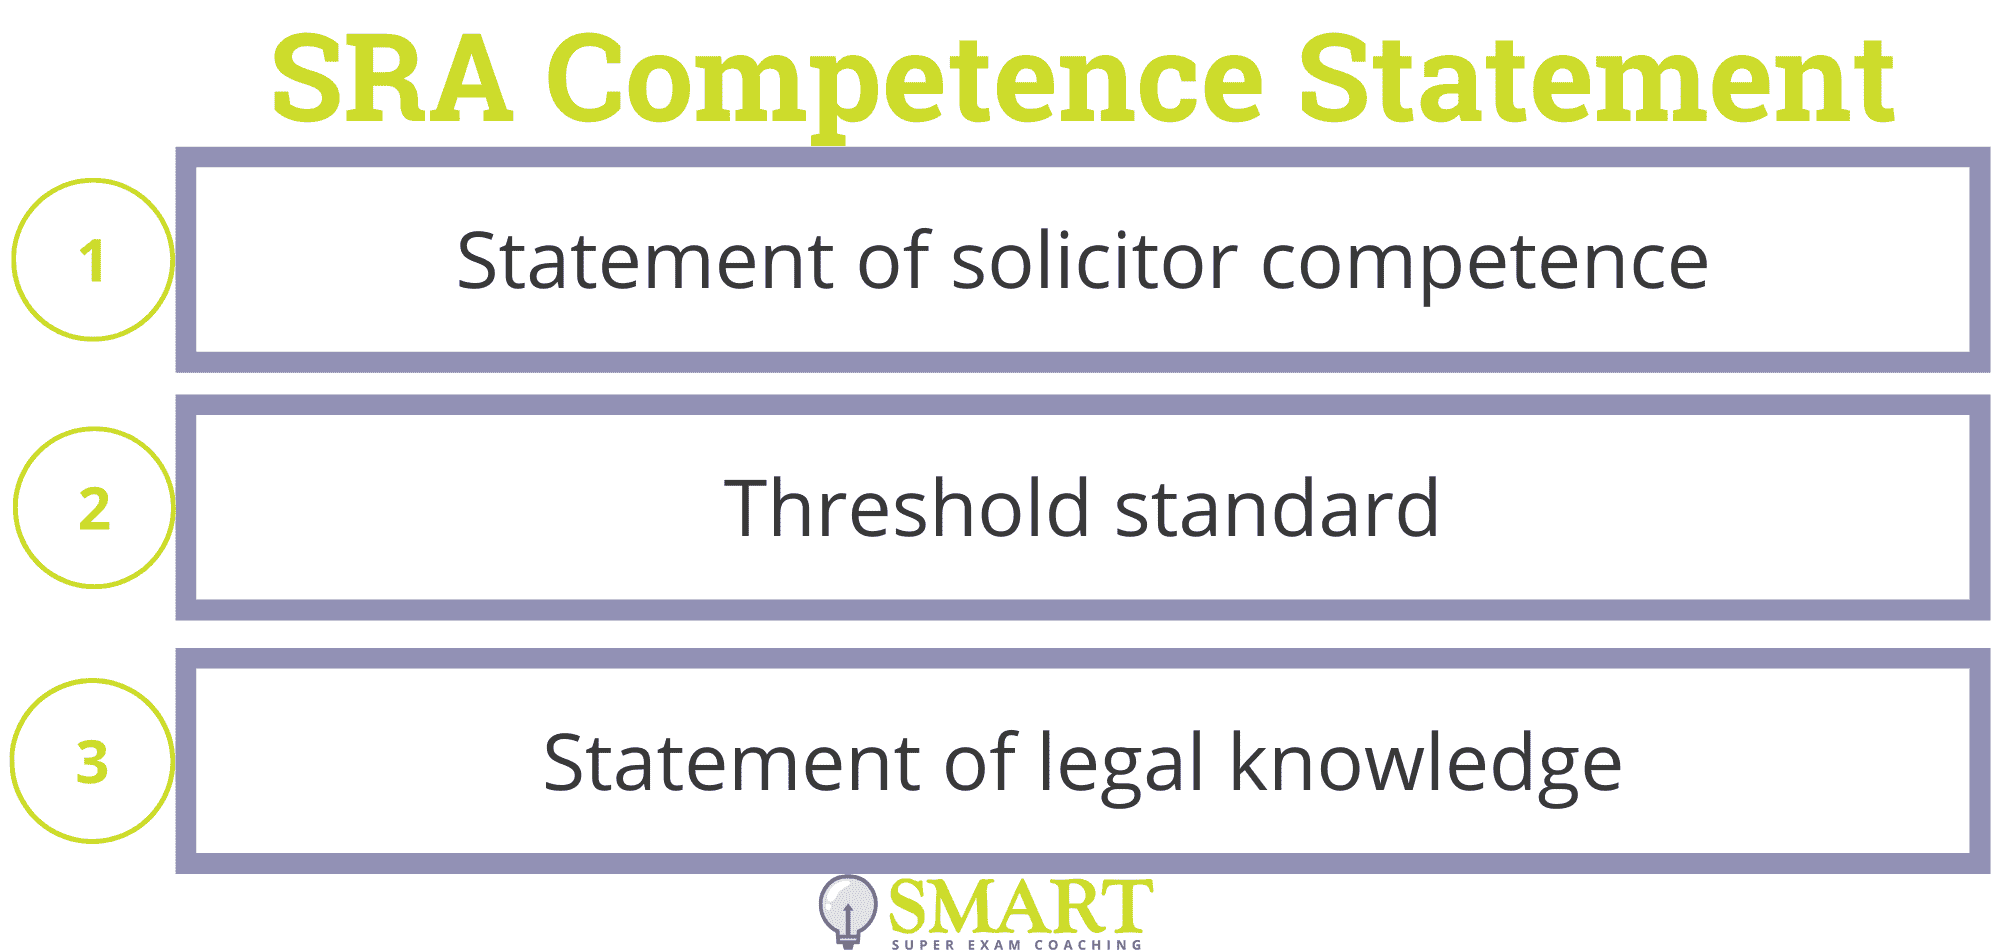 SRA Competence Statement